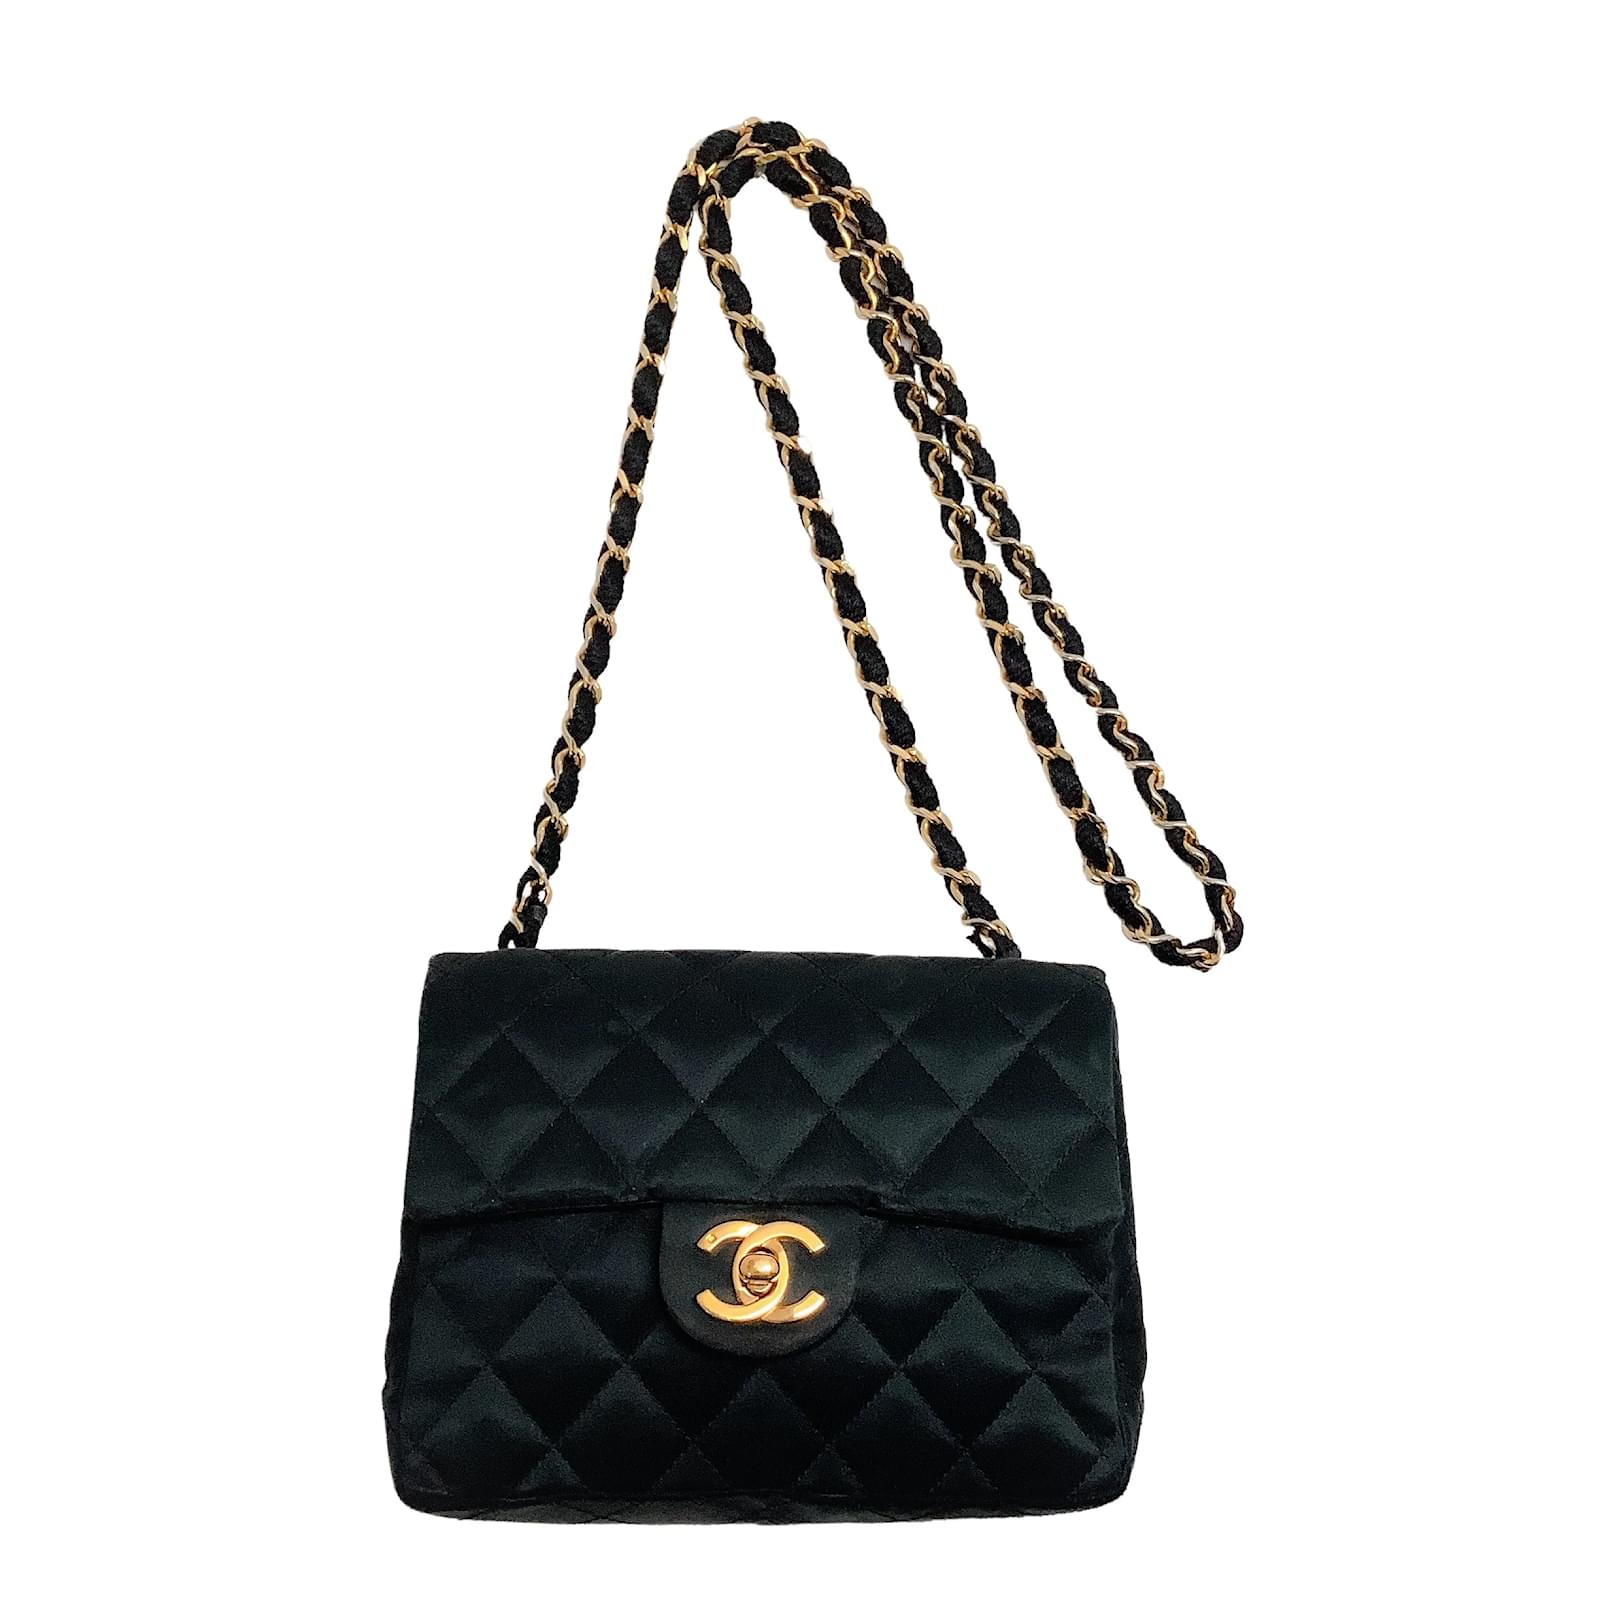 Handbags Chanel Chanel Vintage Mini Black Satin Cross Body Bag